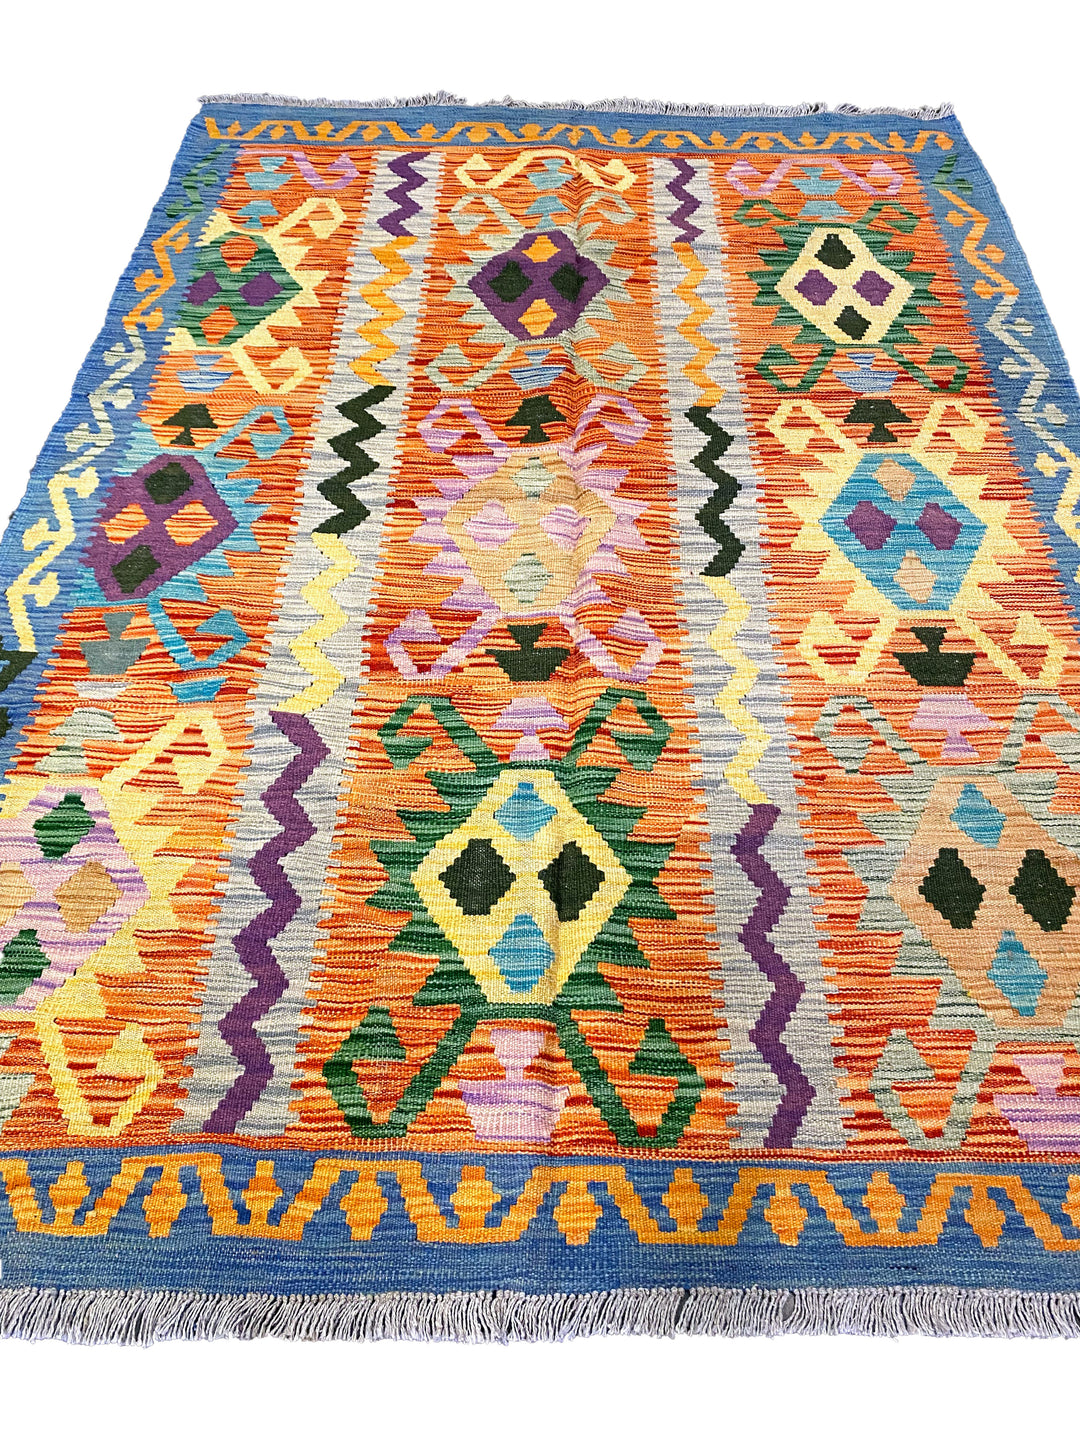 Karlie - Size: 6.6 x 4.9 - Imam Carpet Co